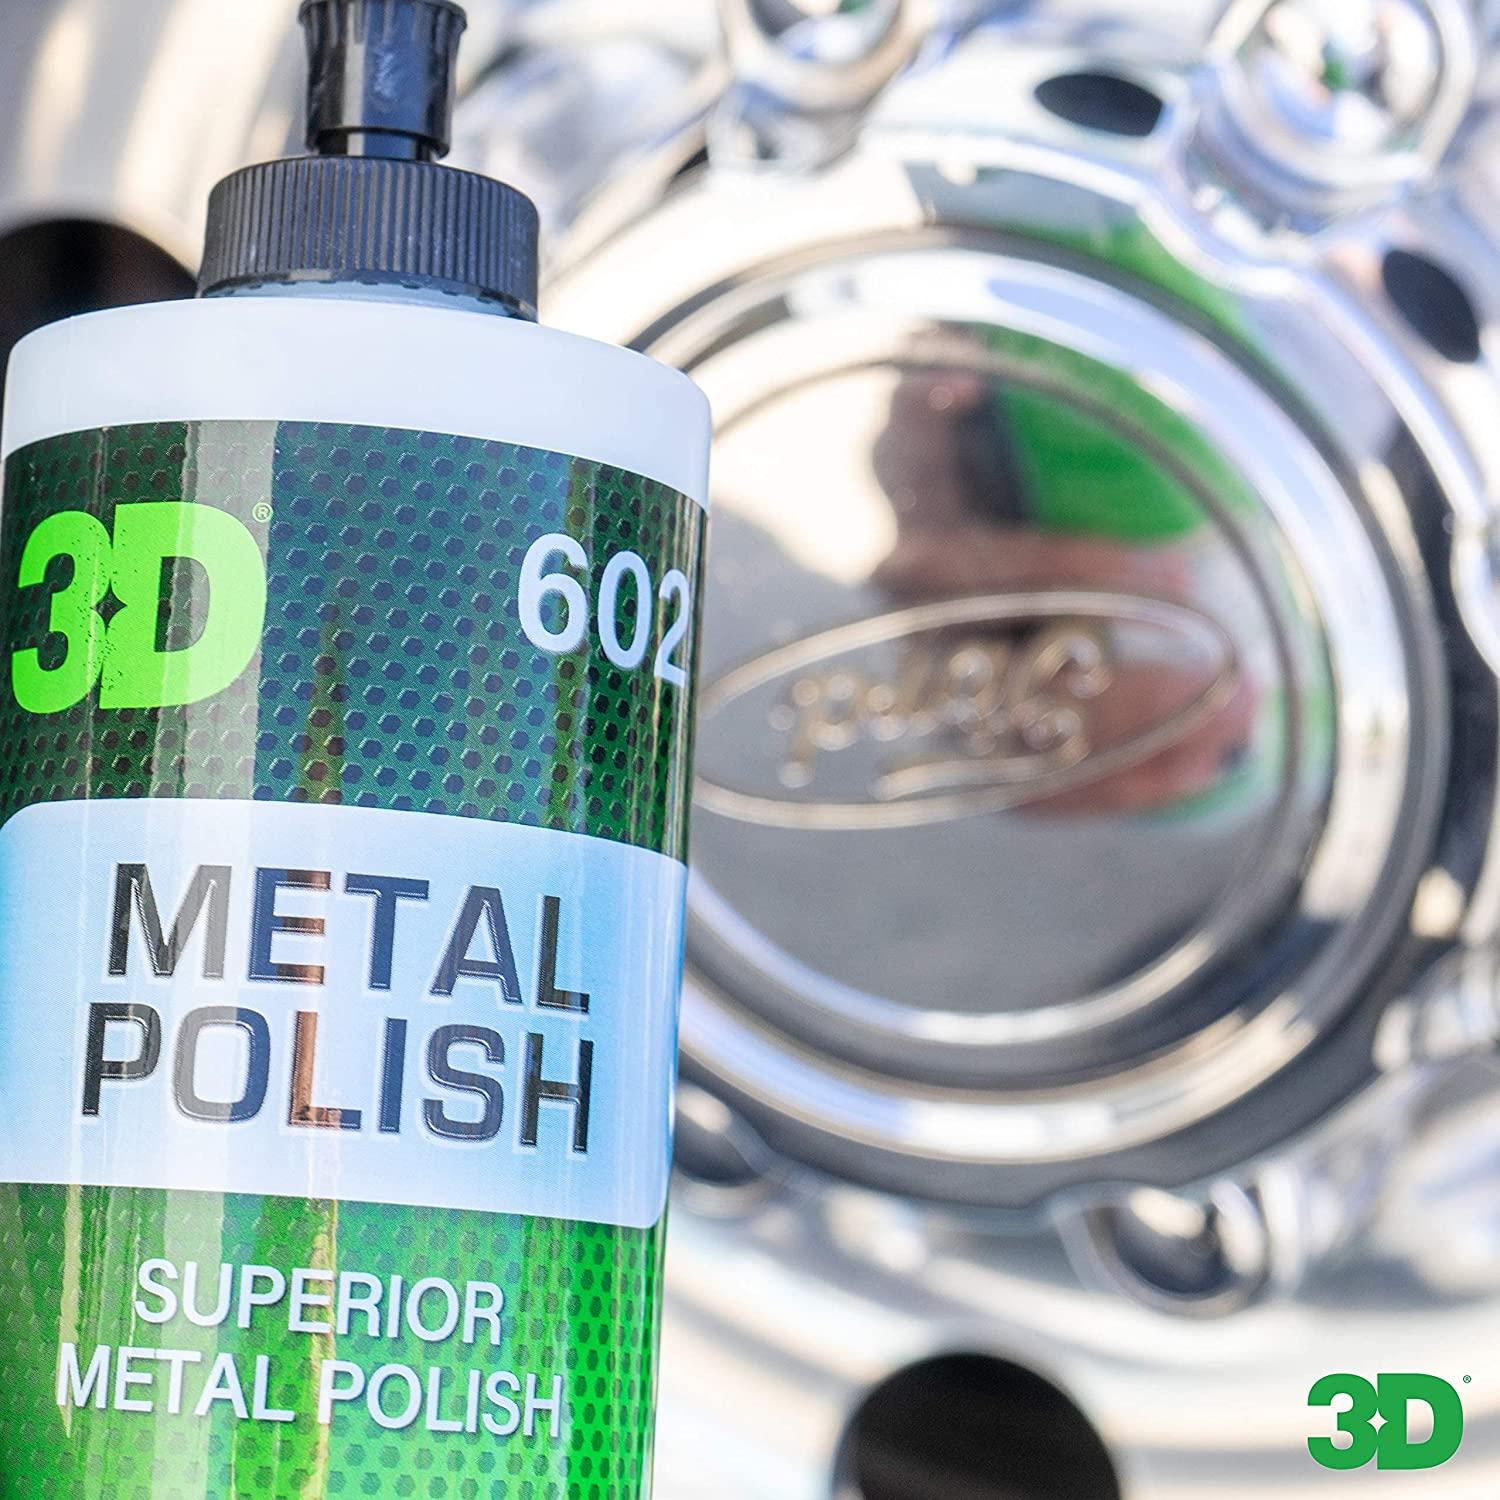 3D Metal Polish - Heavy Duty Multi Purpose Polish, Cleaner, Restorer and  Protectant for Metal, Aluminum, Chrome 16oz. 16 Fl Oz (Pack of 1)